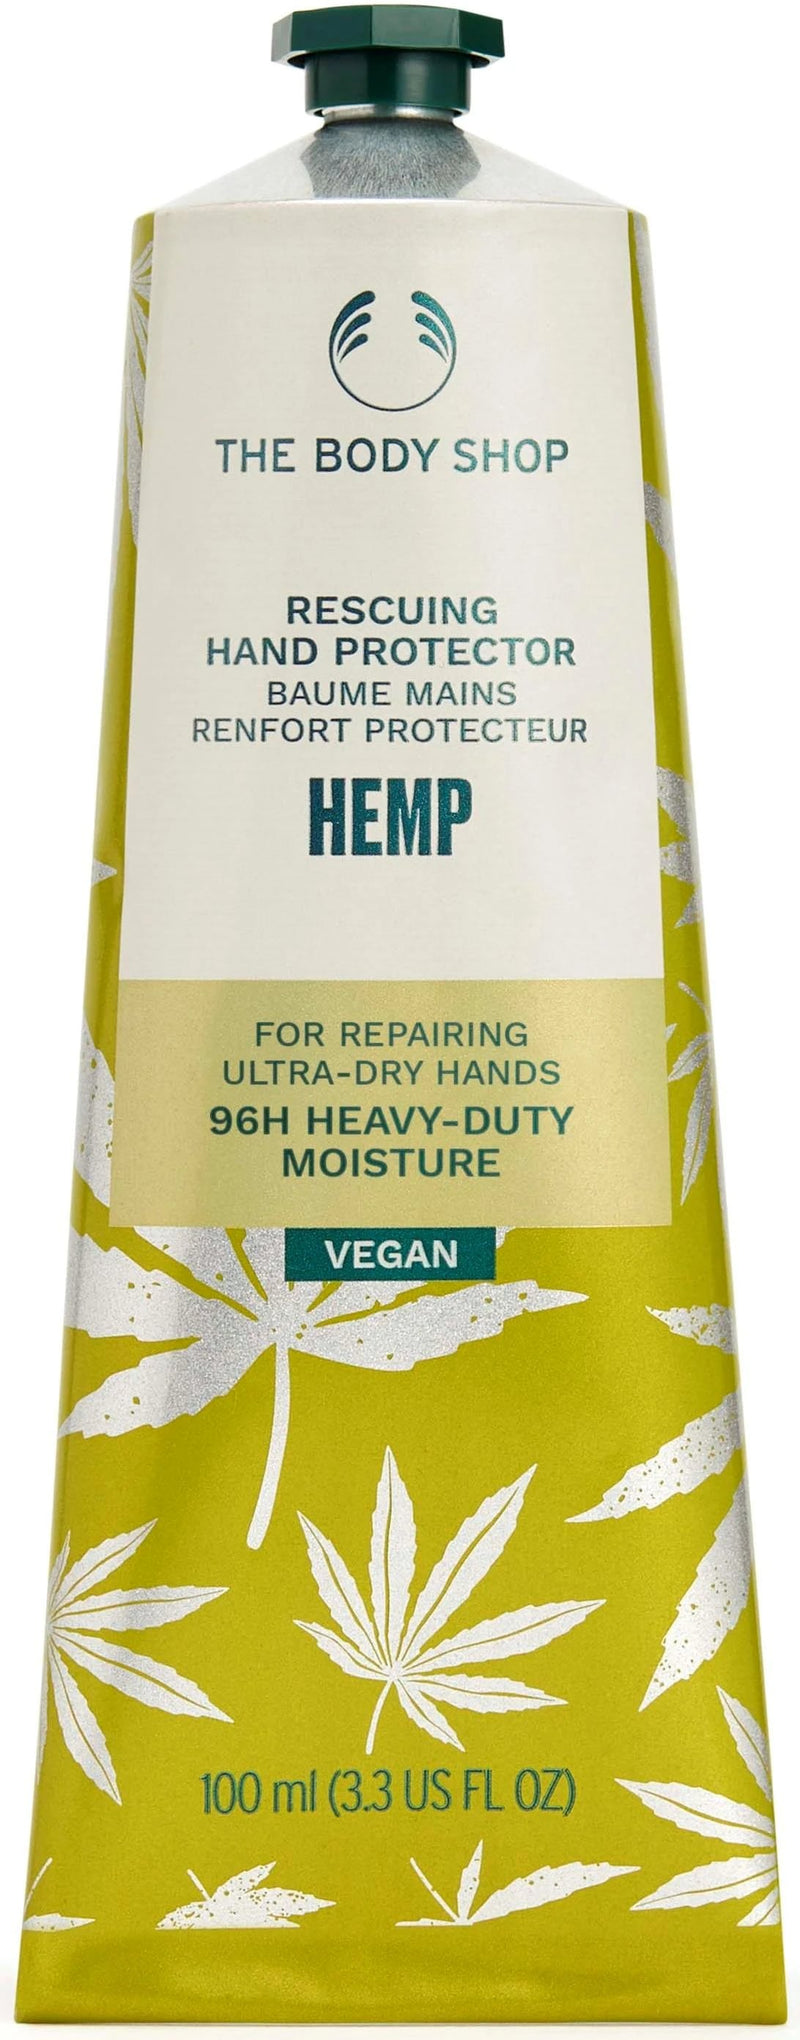 The Body Shop hemp hand protection 100ml